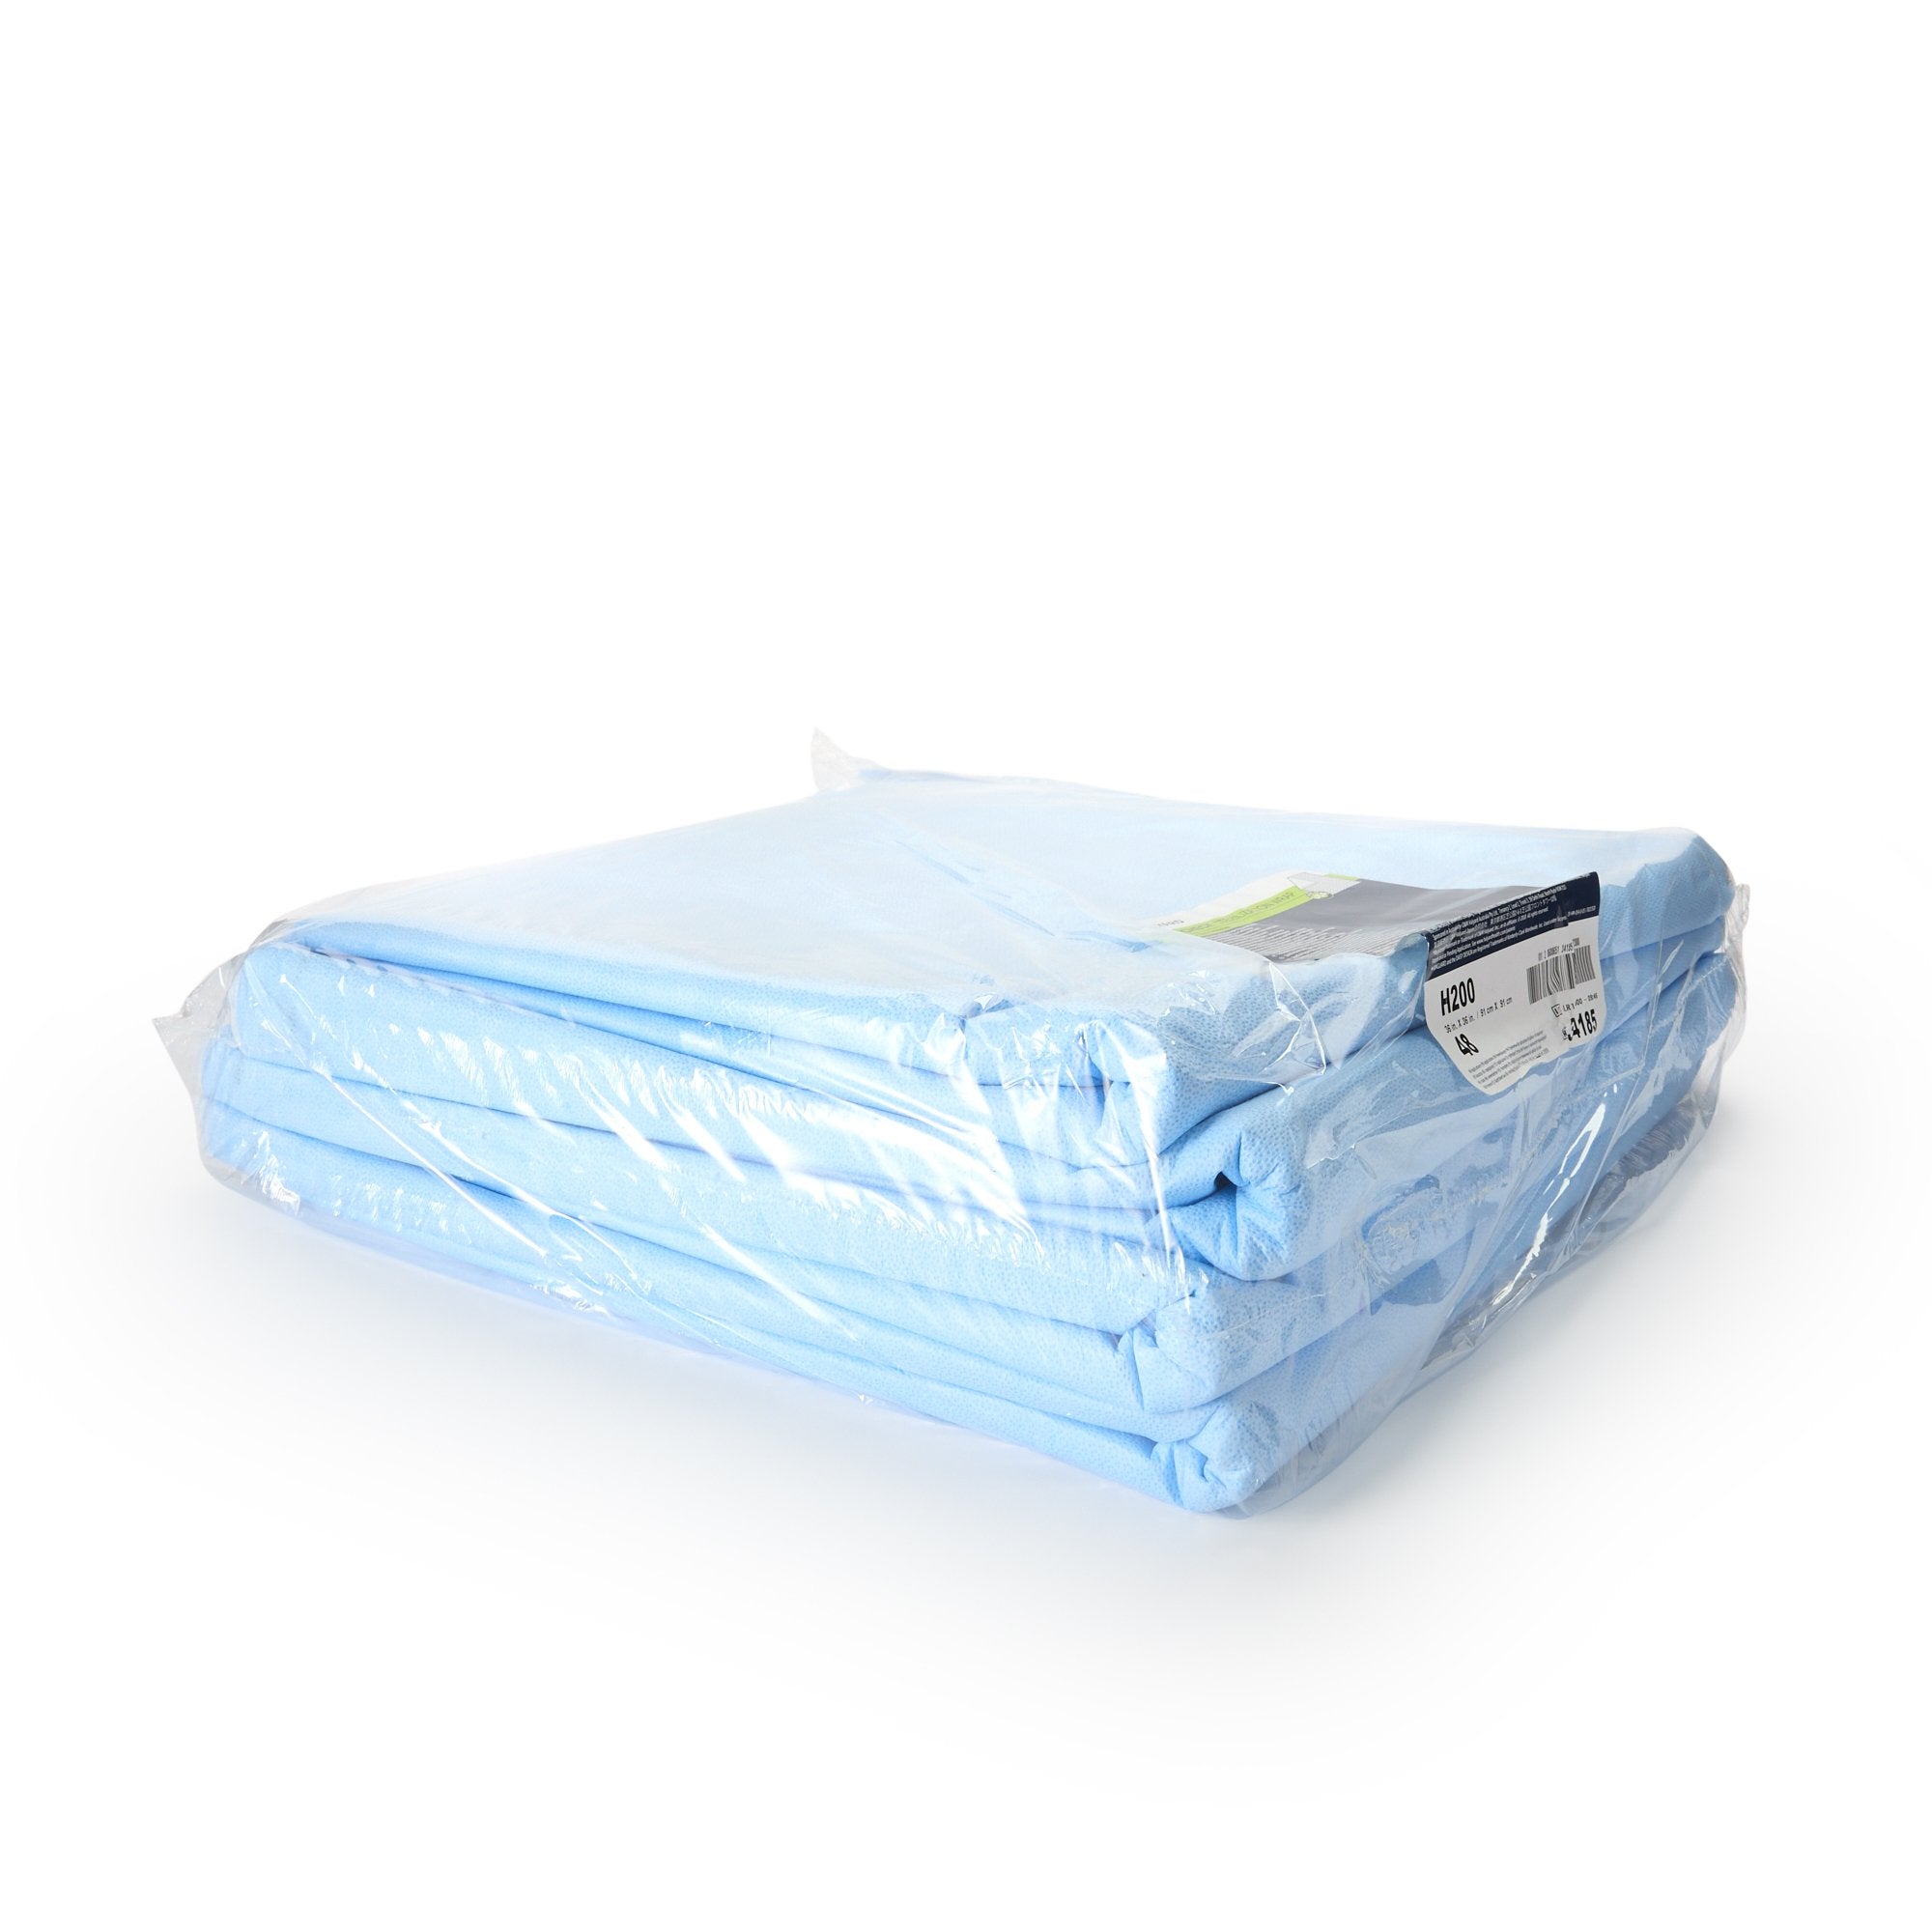 QUICK CHECK* H200 Sterilization Wrap White / Blue 36 X 36 Inch Dual Layer SMS Polypropylene Steam / EO Gas / Hydrogen Peroxide